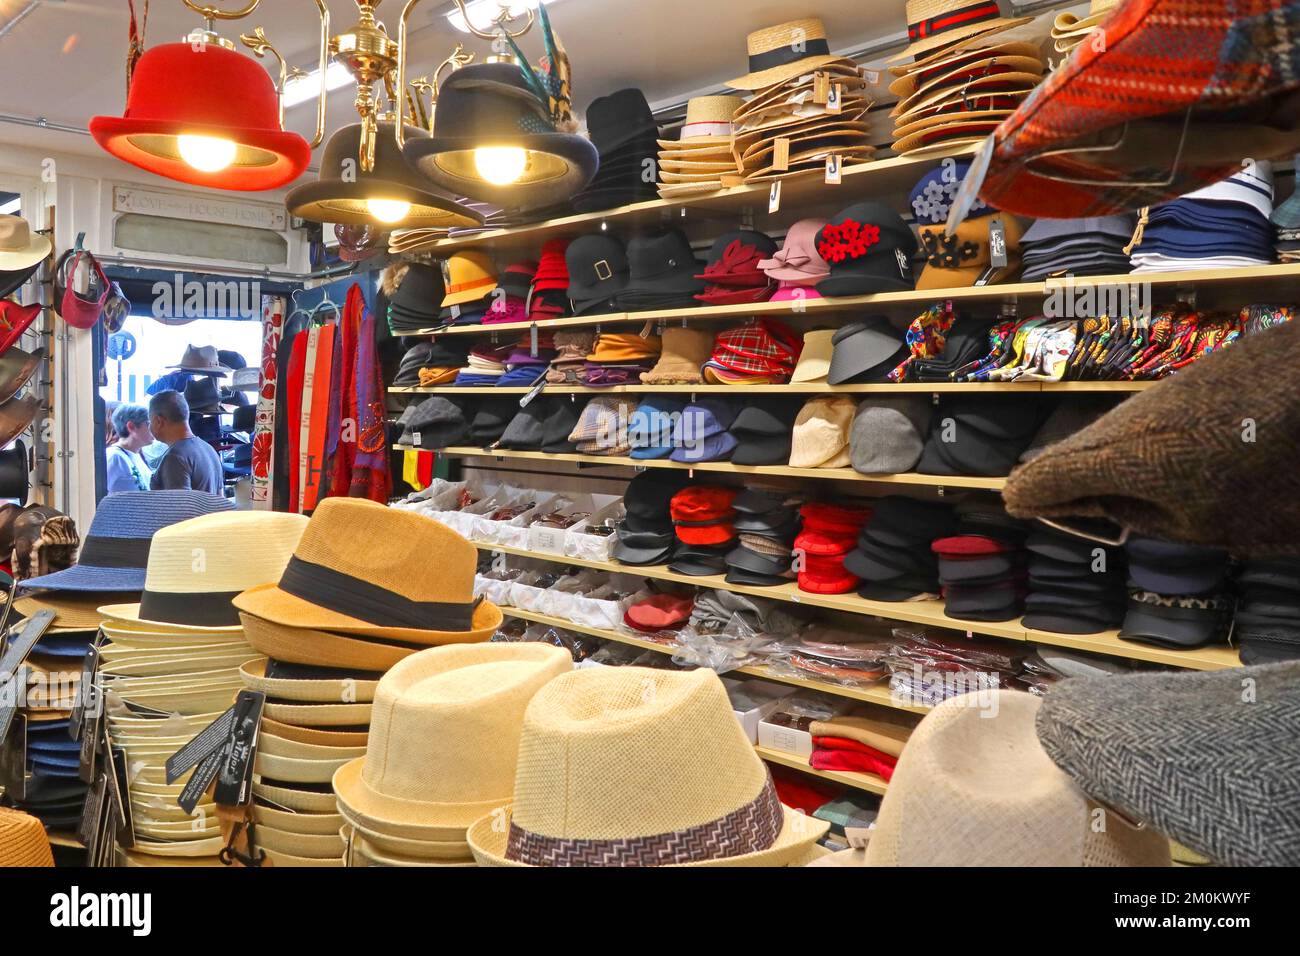 The Hat shop, 87 Portobello Road, Notting Hill, RBKC, Londres, Angleterre, Royaume-Uni, W11 2QB Banque D'Images